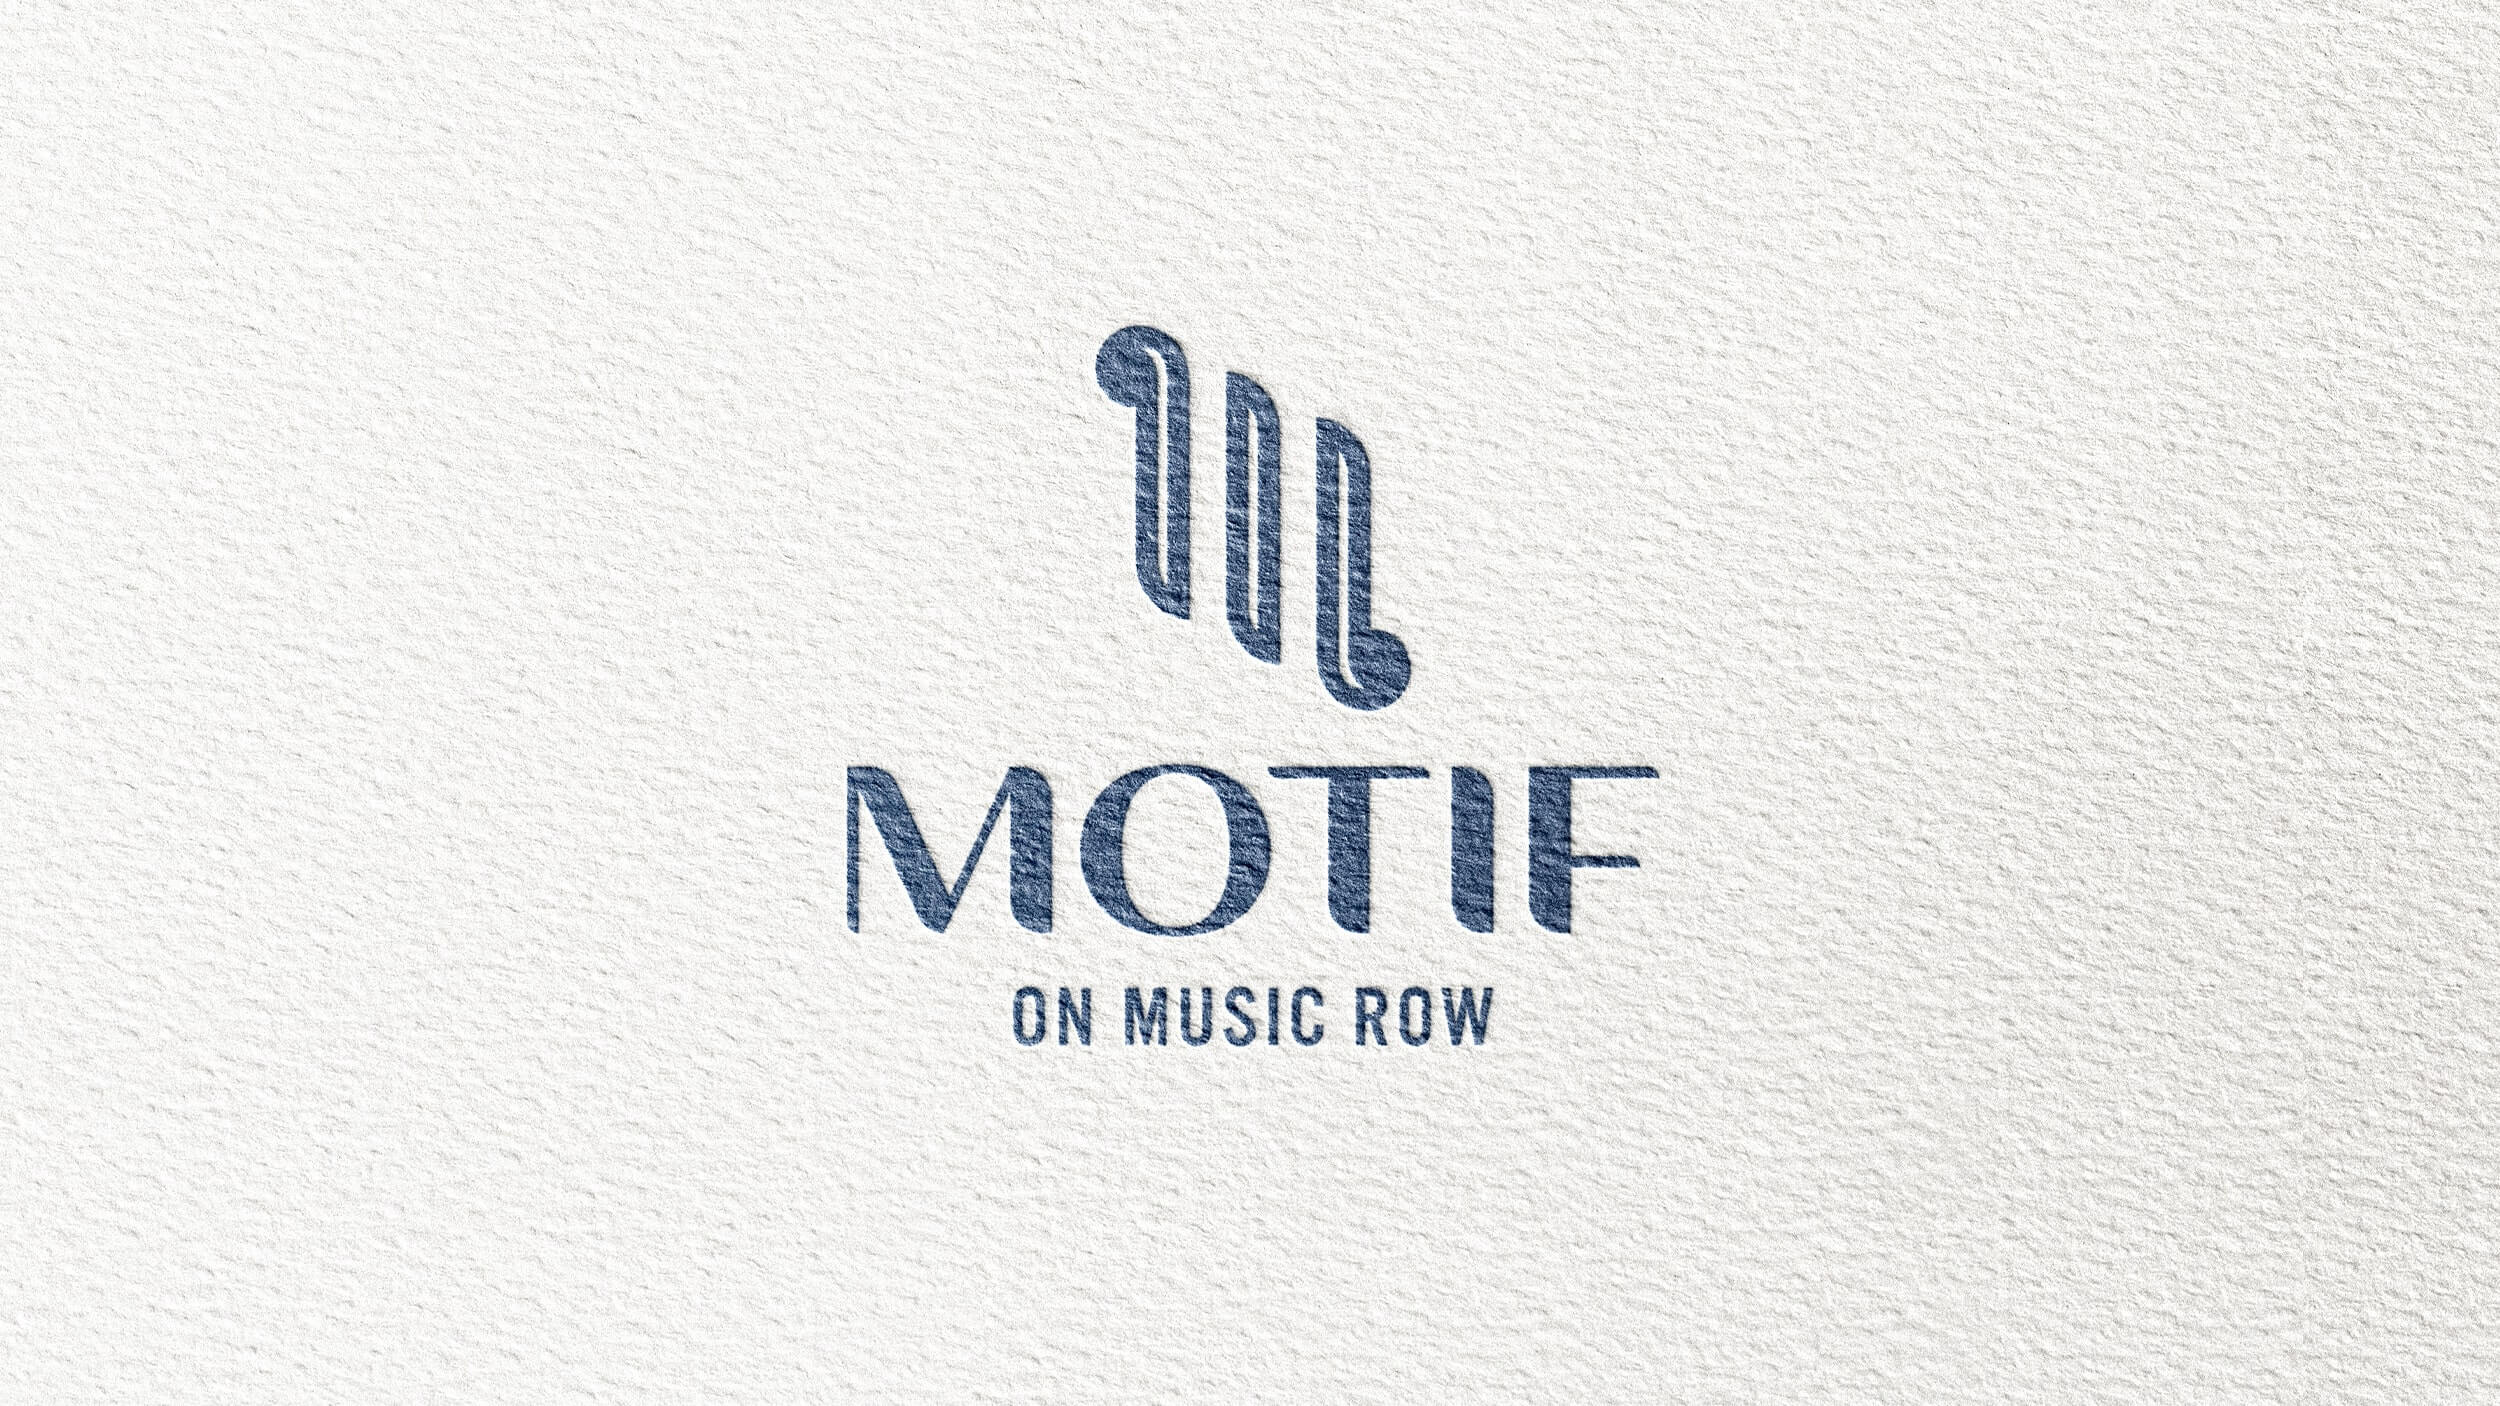 Motif logo on white wall